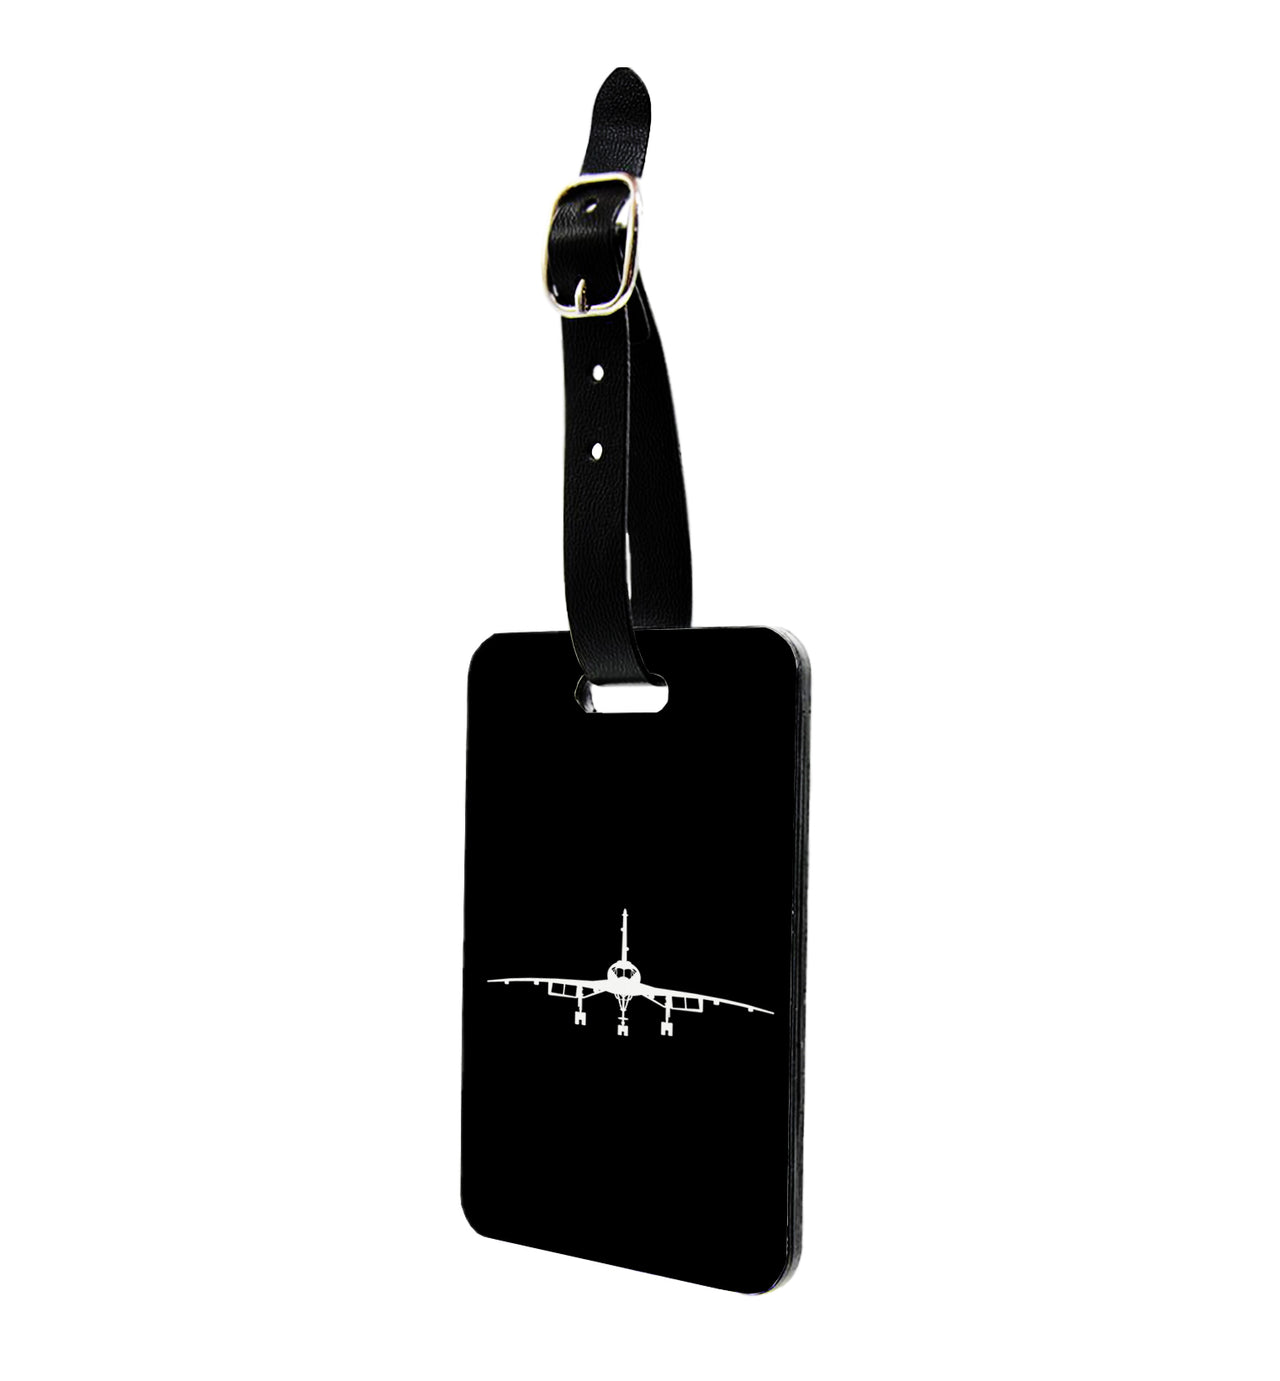 Concorde Silhouette Designed Luggage Tag